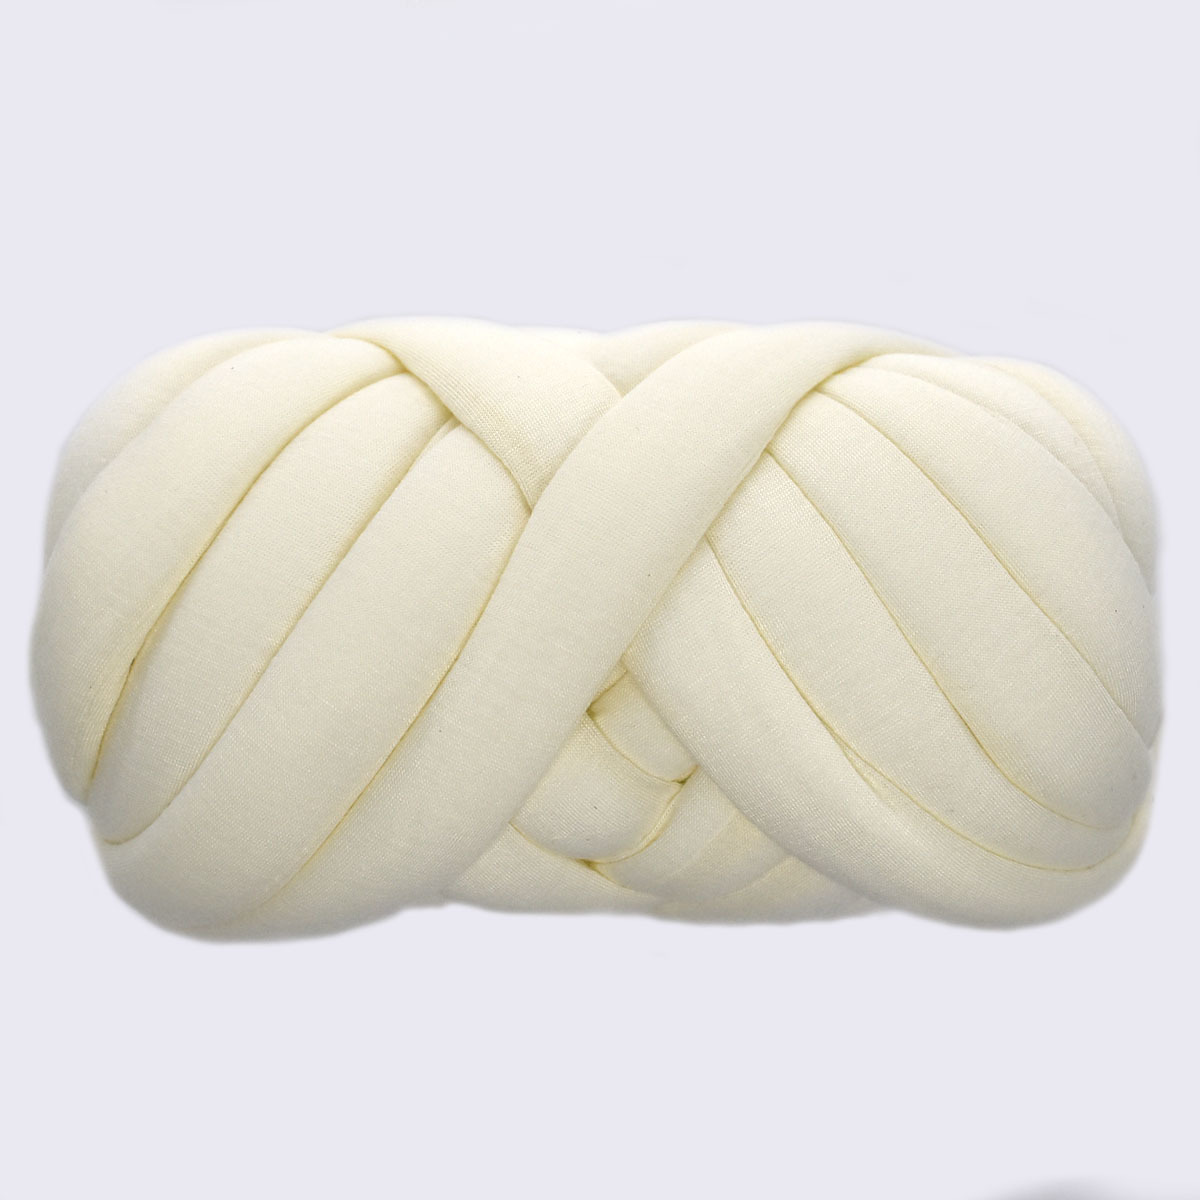 chunky yarn cotton soft hand arm